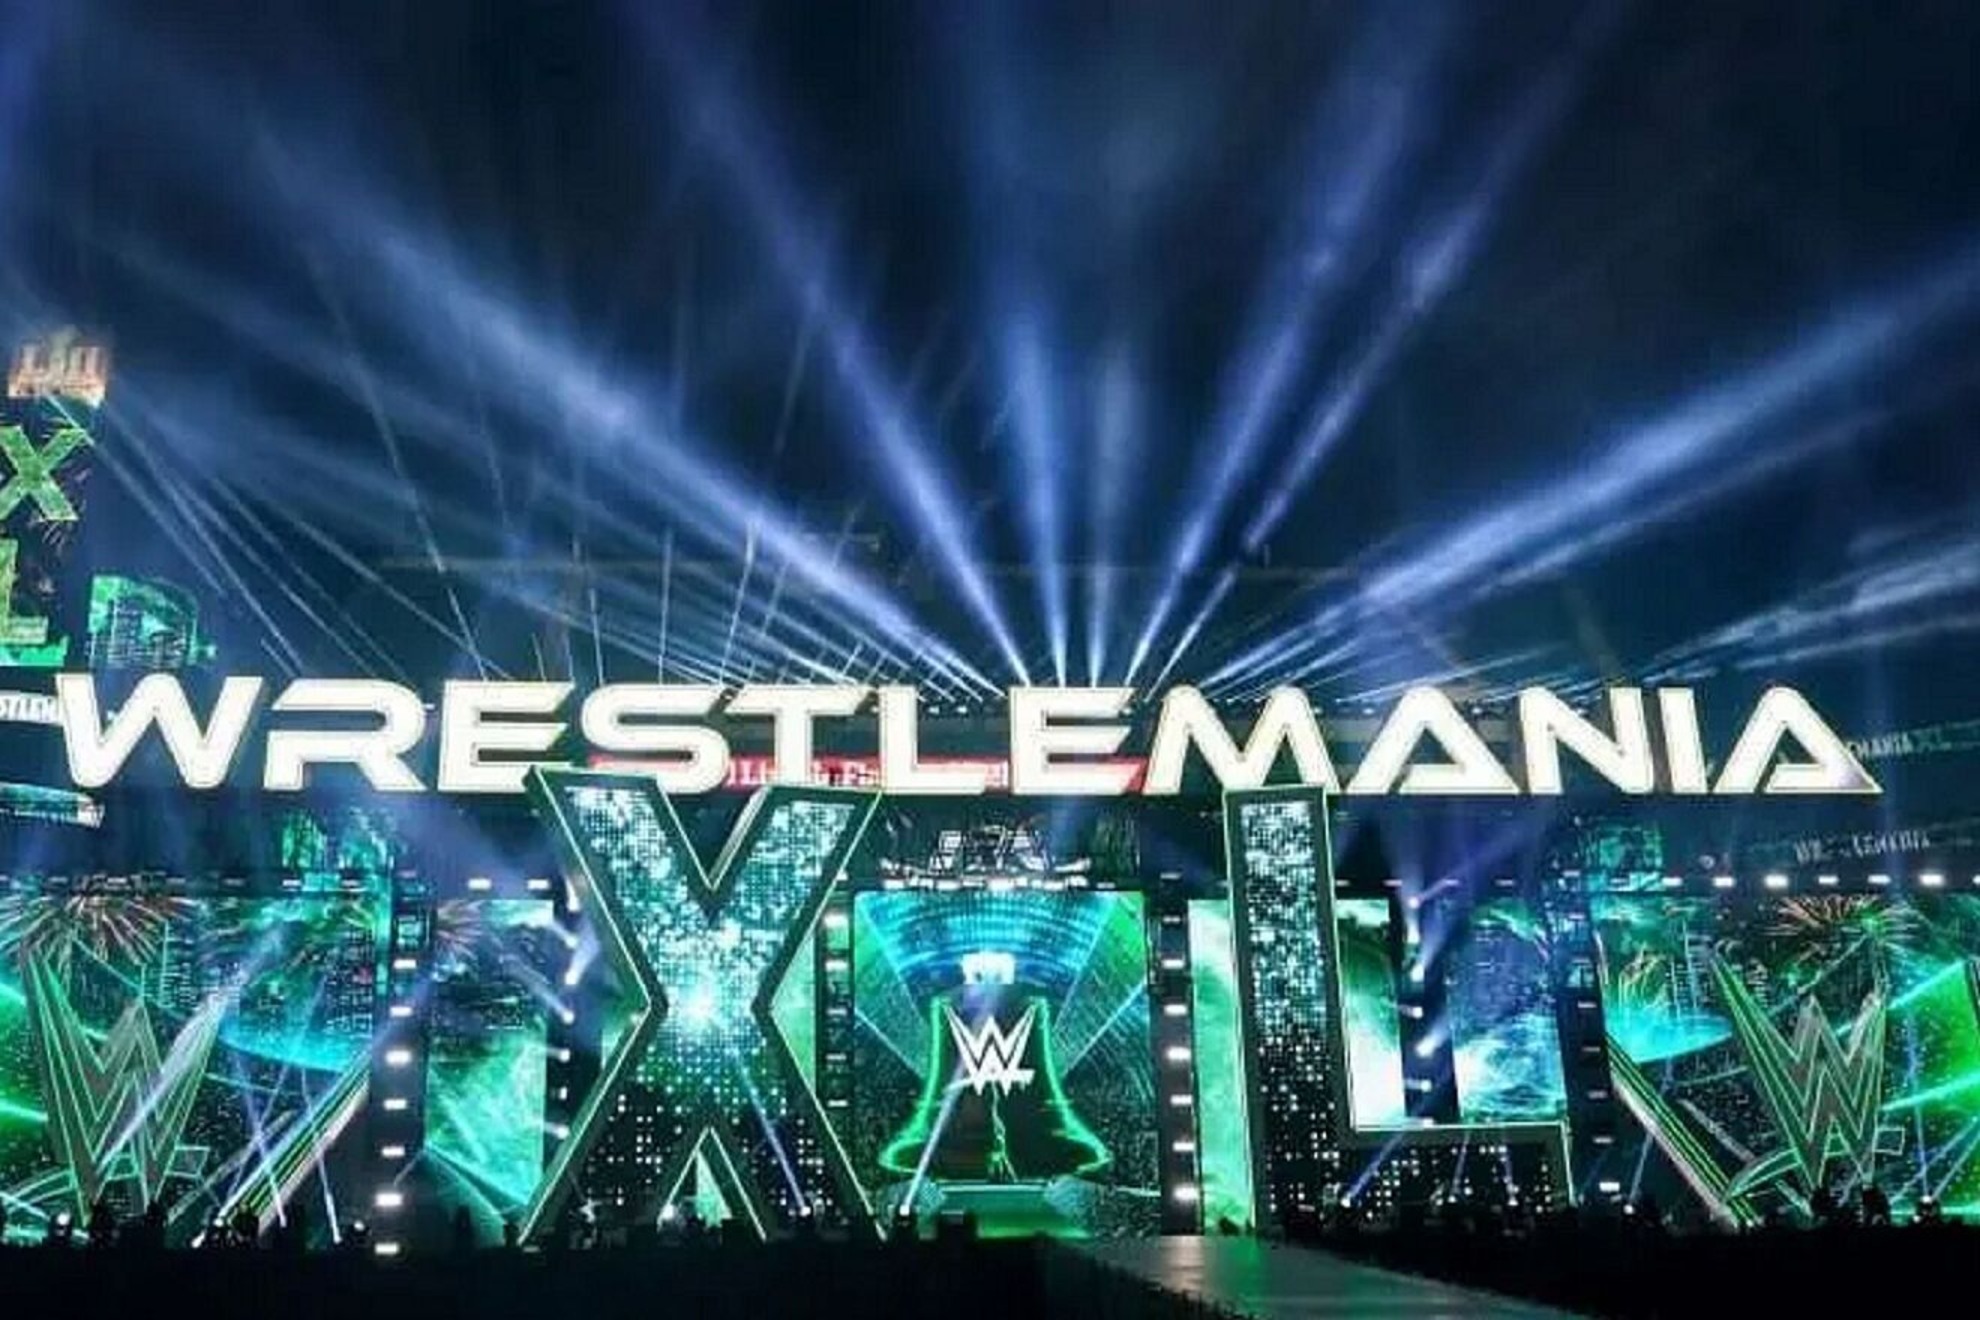 WrestleMania XL begins on Saturday